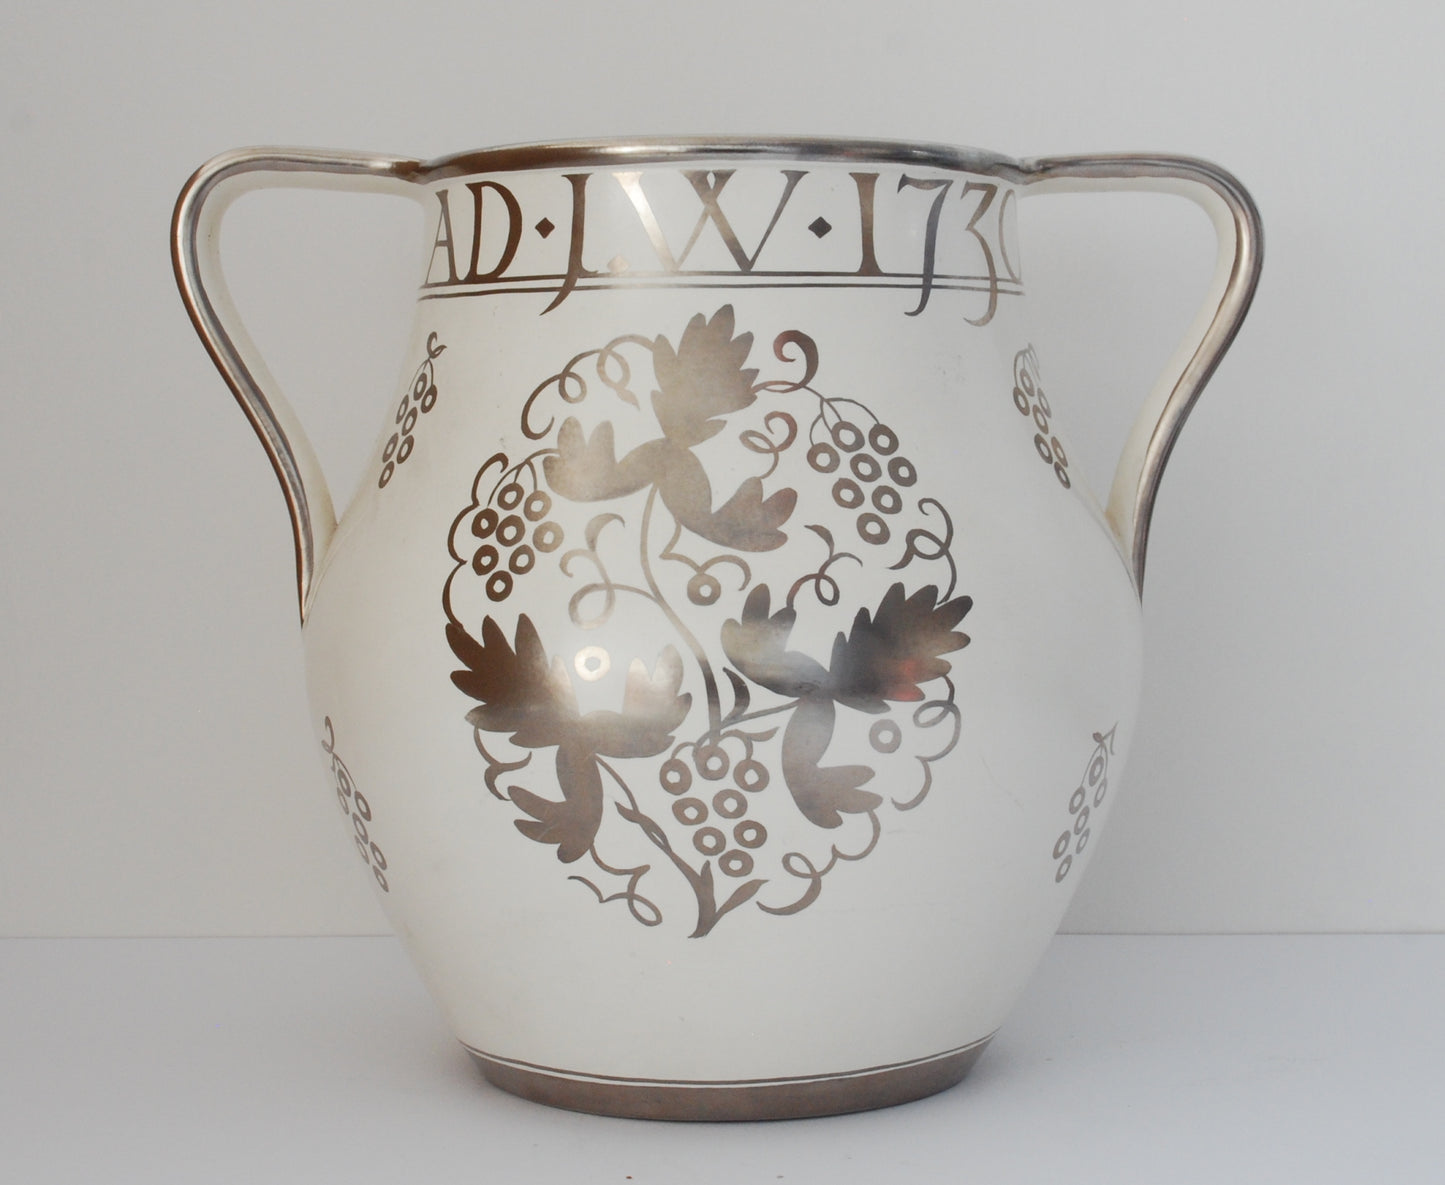 Bicentenary vase